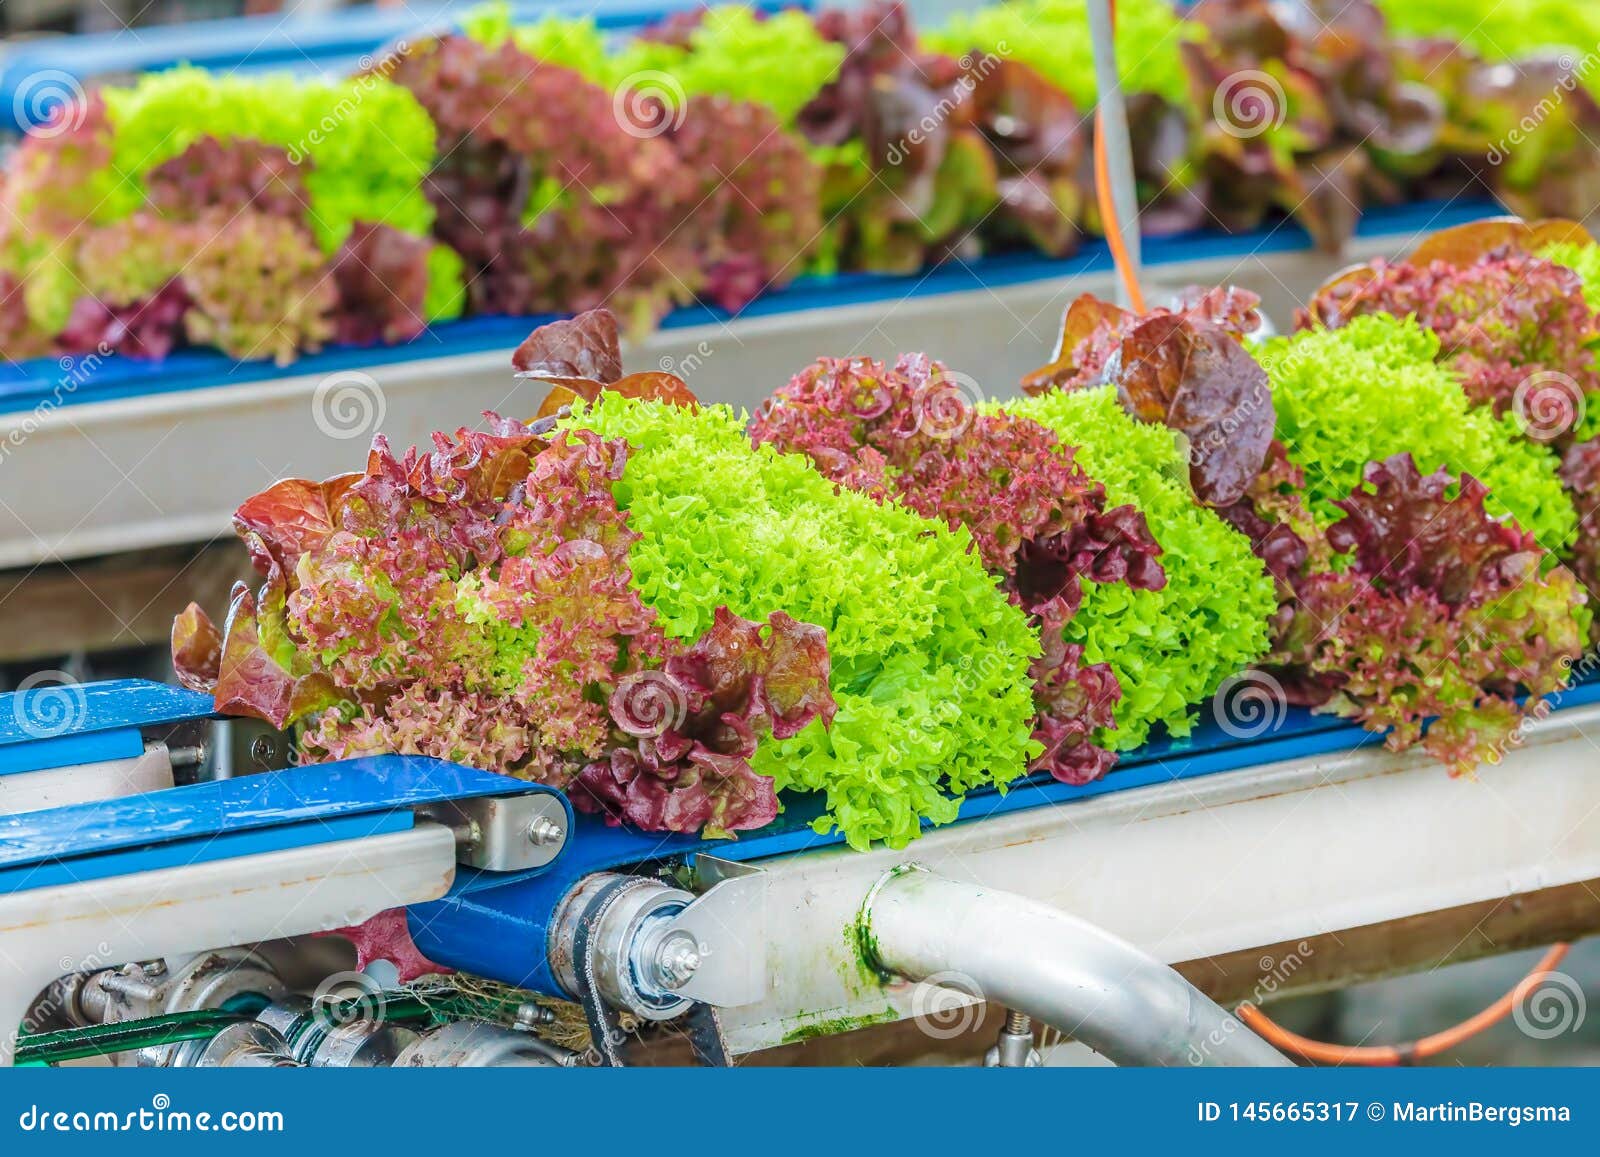 conveyor belt with fresh lollo rosso lettuce